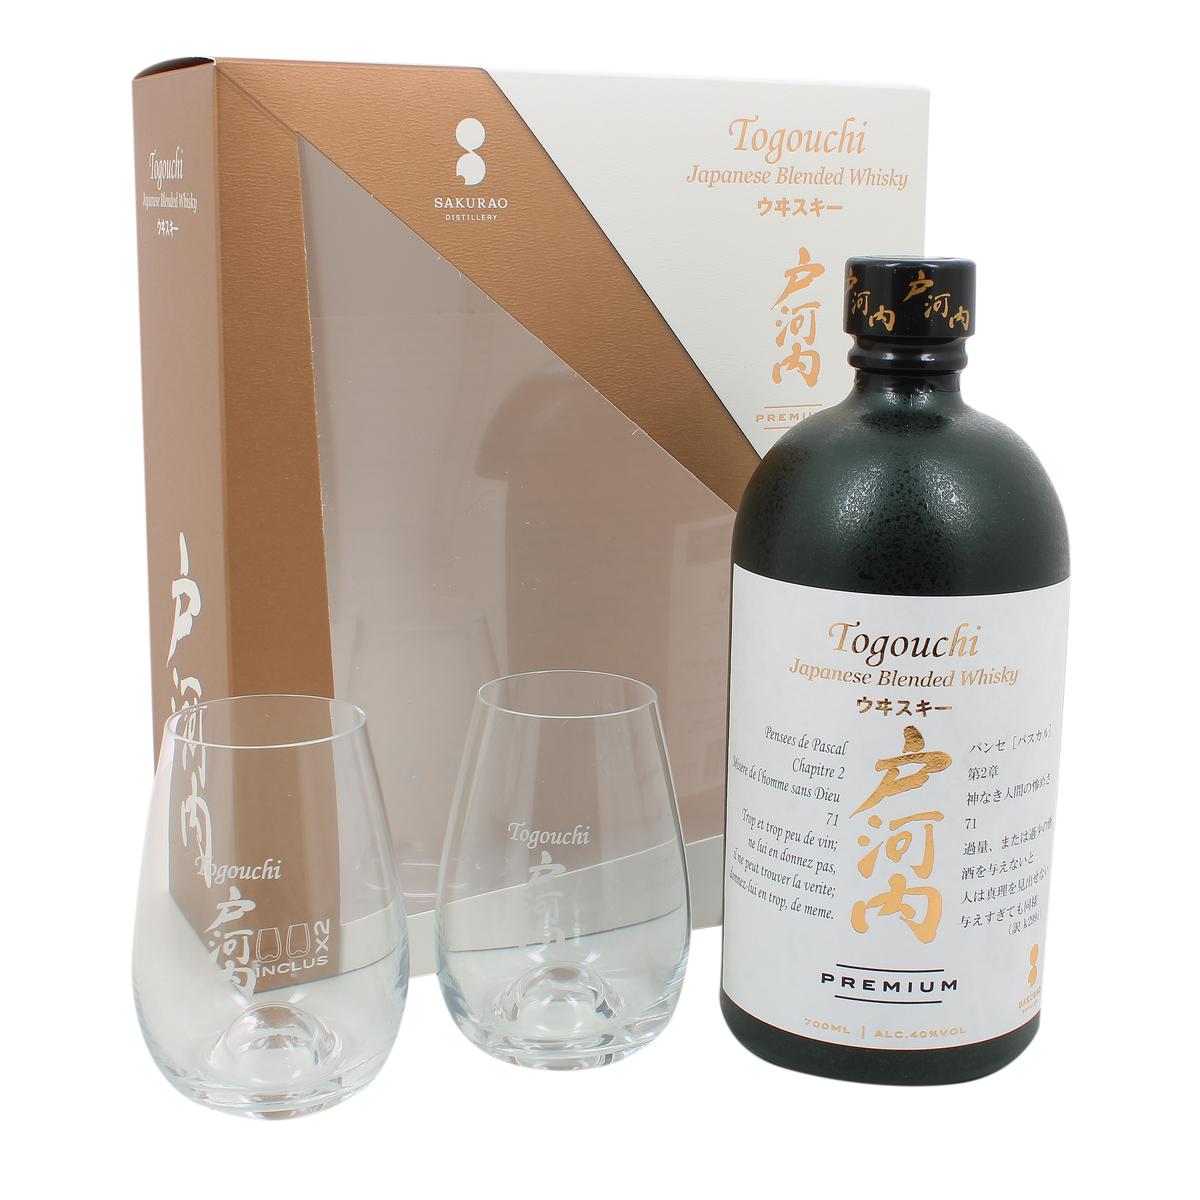 Acheter Togouchi Blended scotch whisky 40°, 70cl coffret avec verres